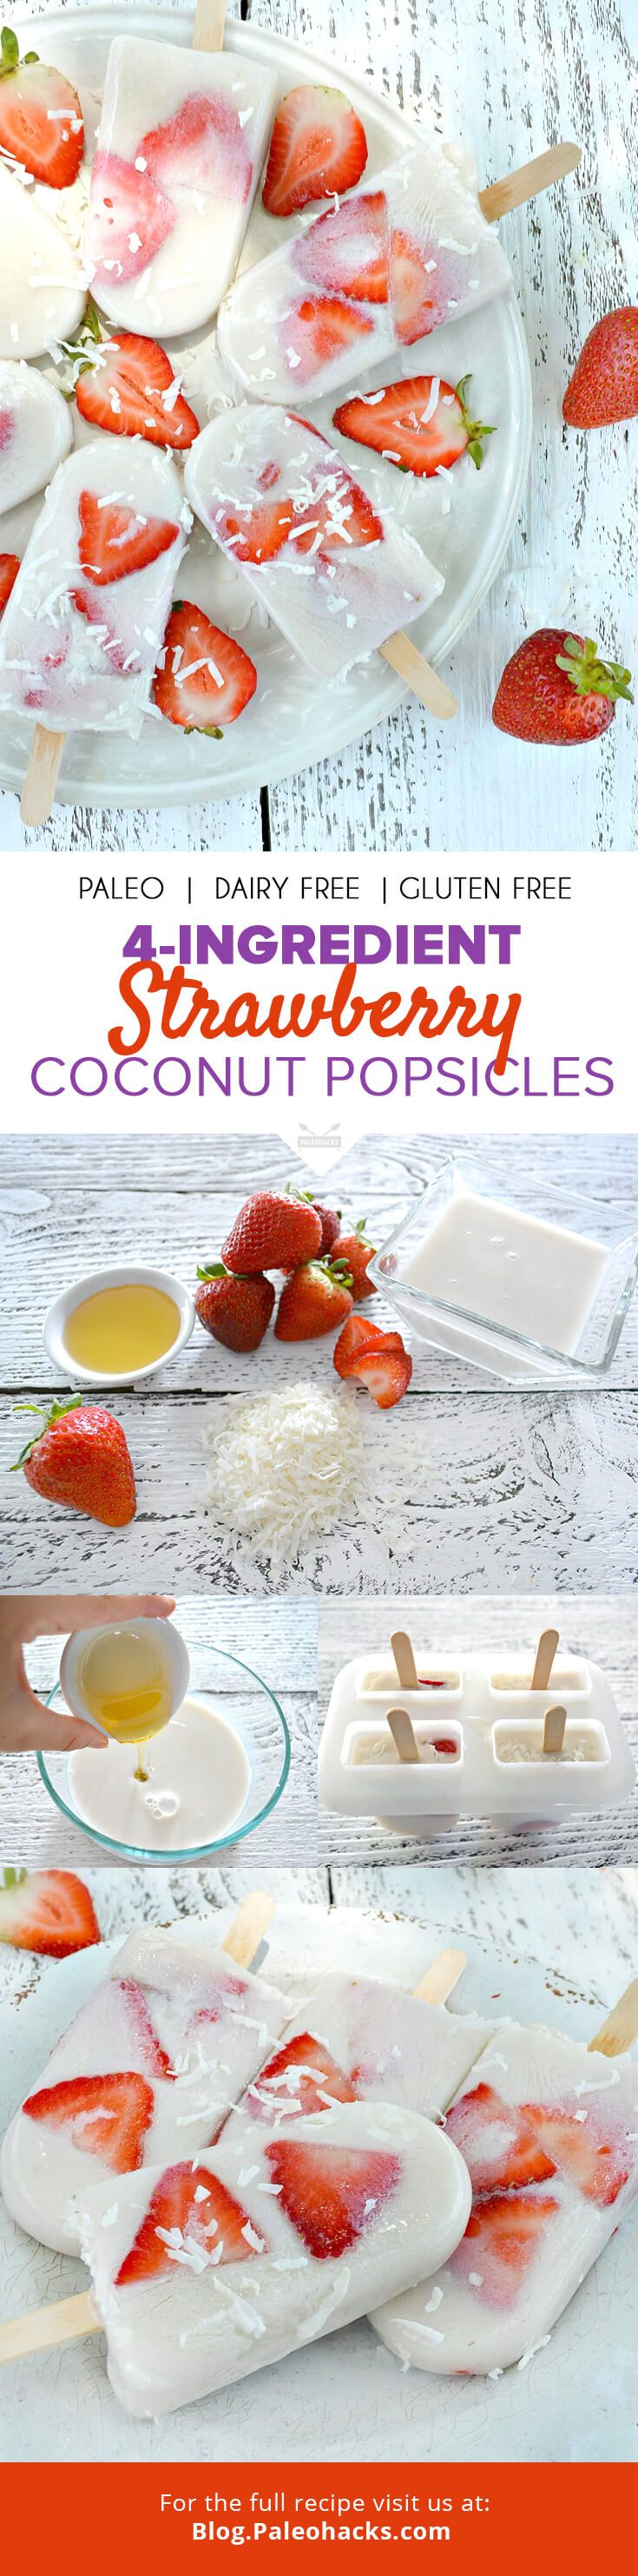 strawberry popsicles recipe